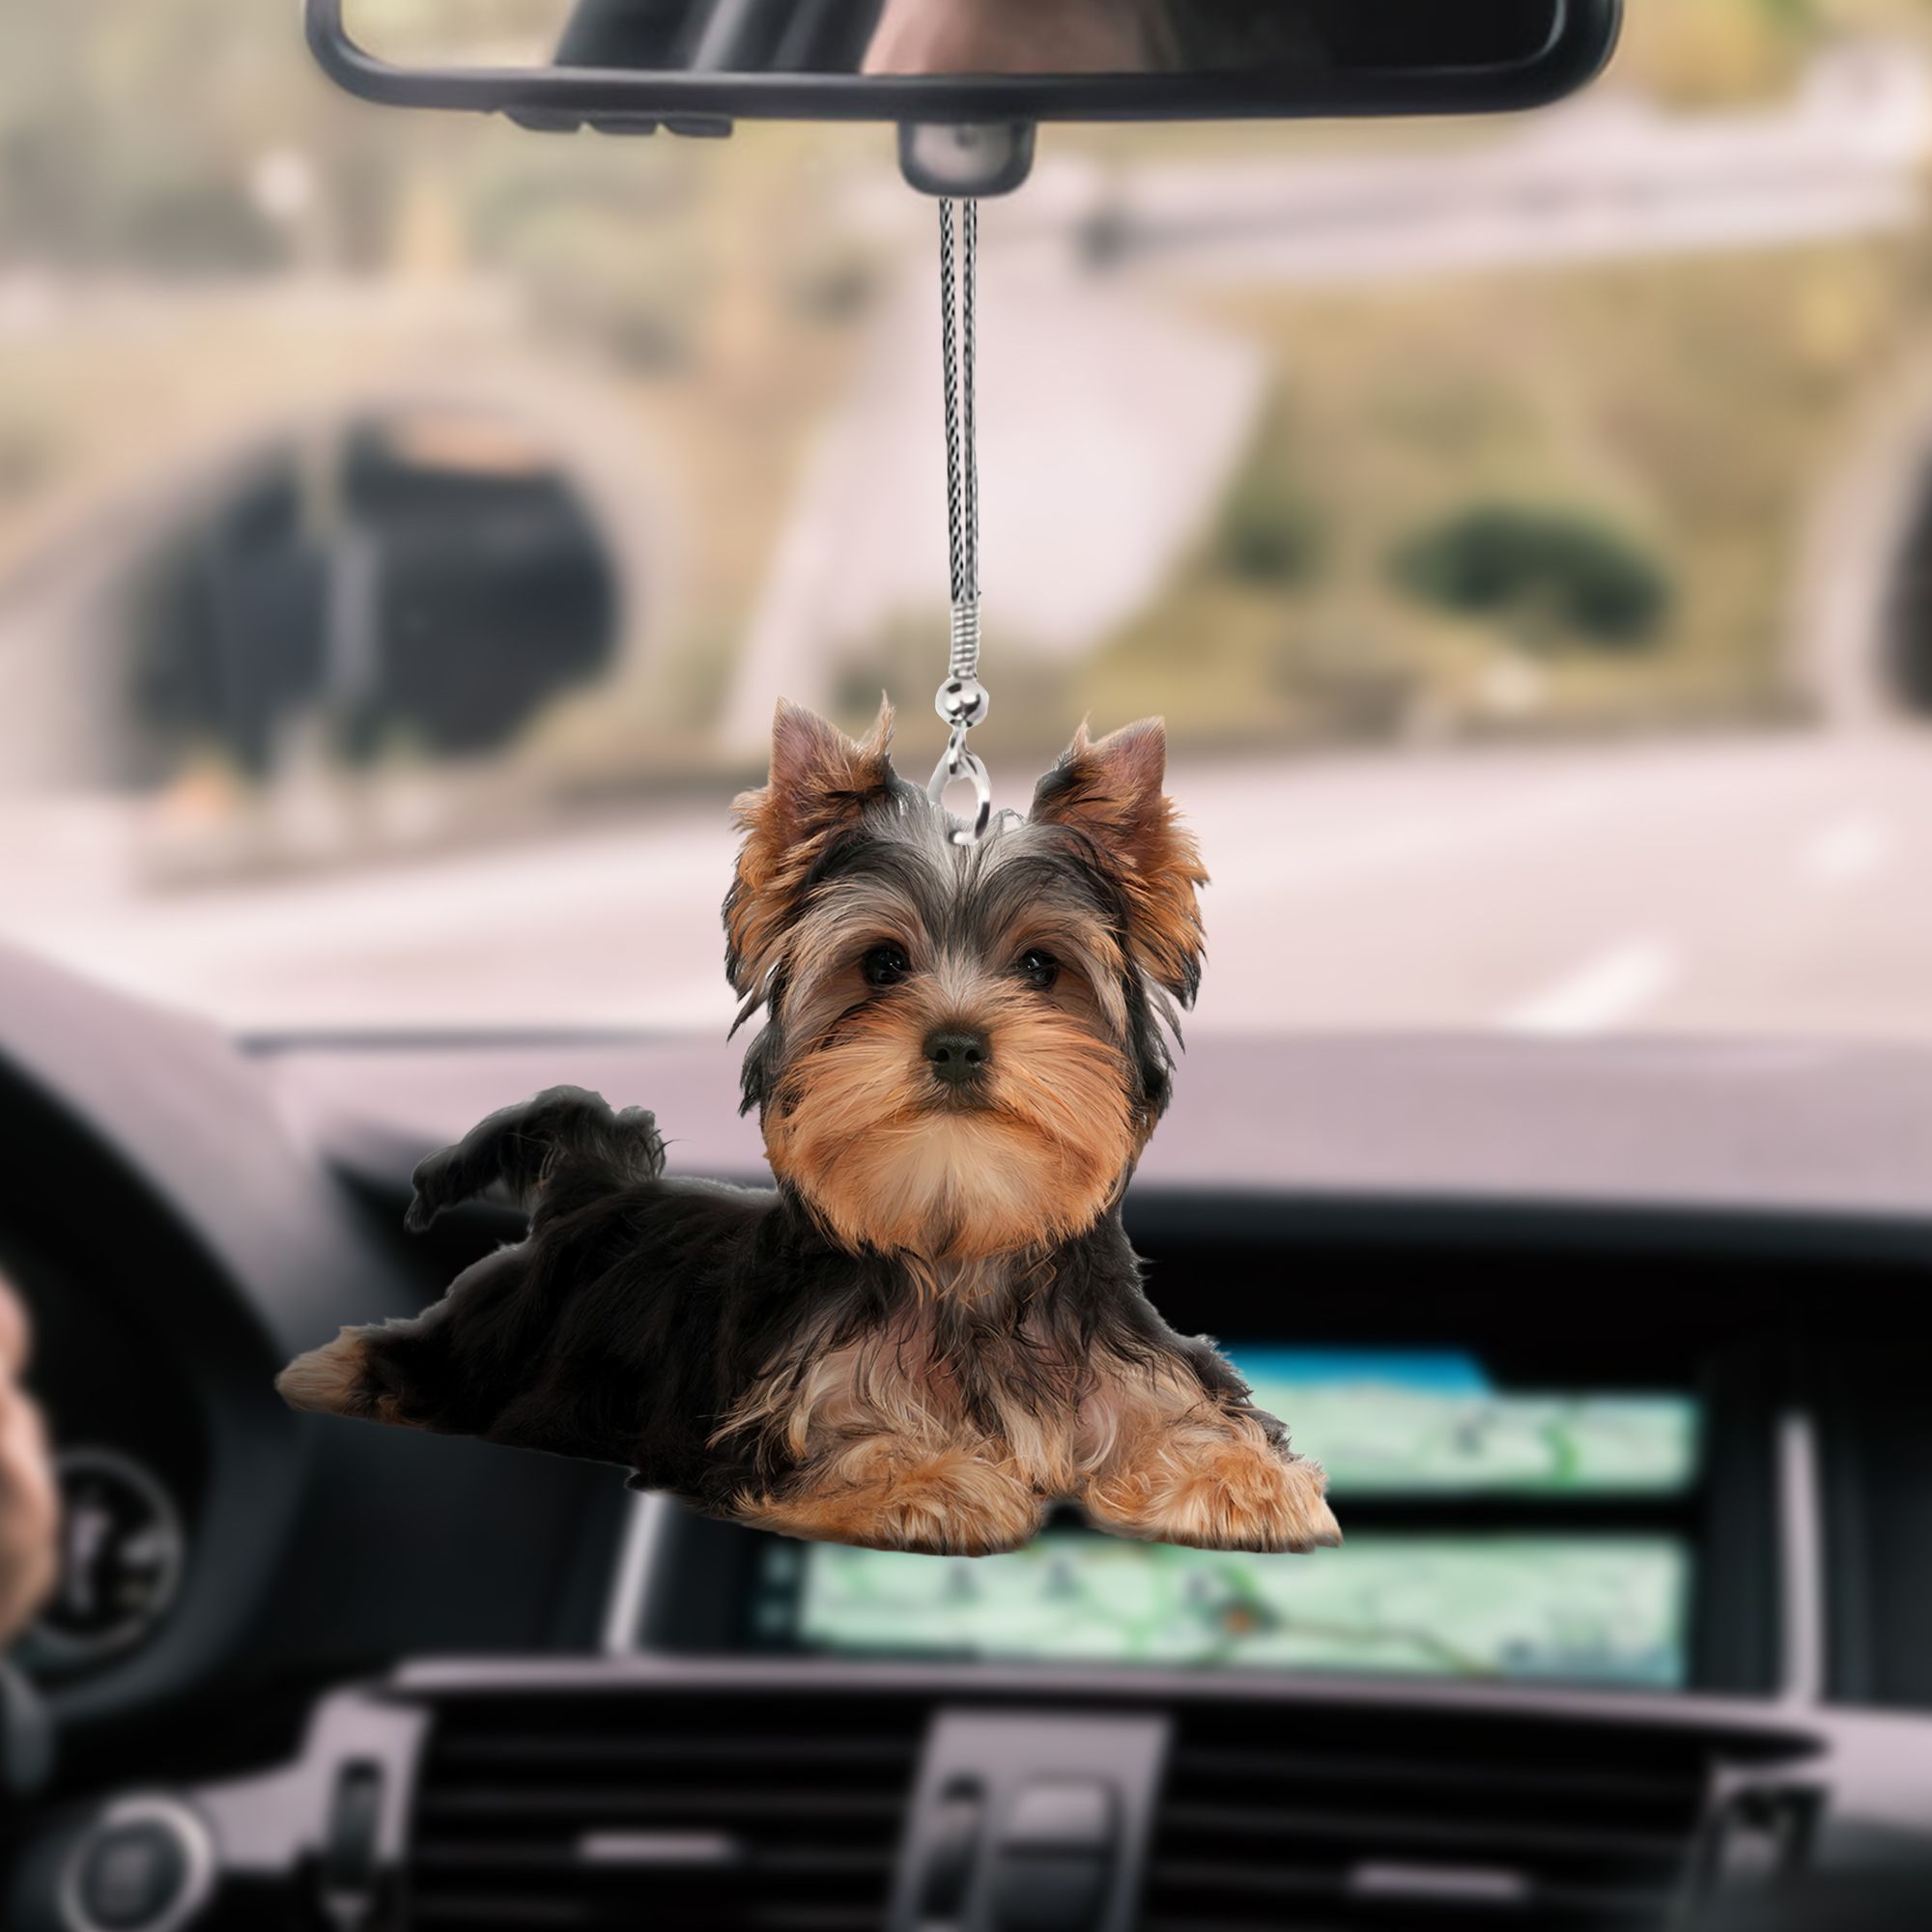 yorkshire-terrier-lying-py75-ntt070997-nct-car-hanging-ornament